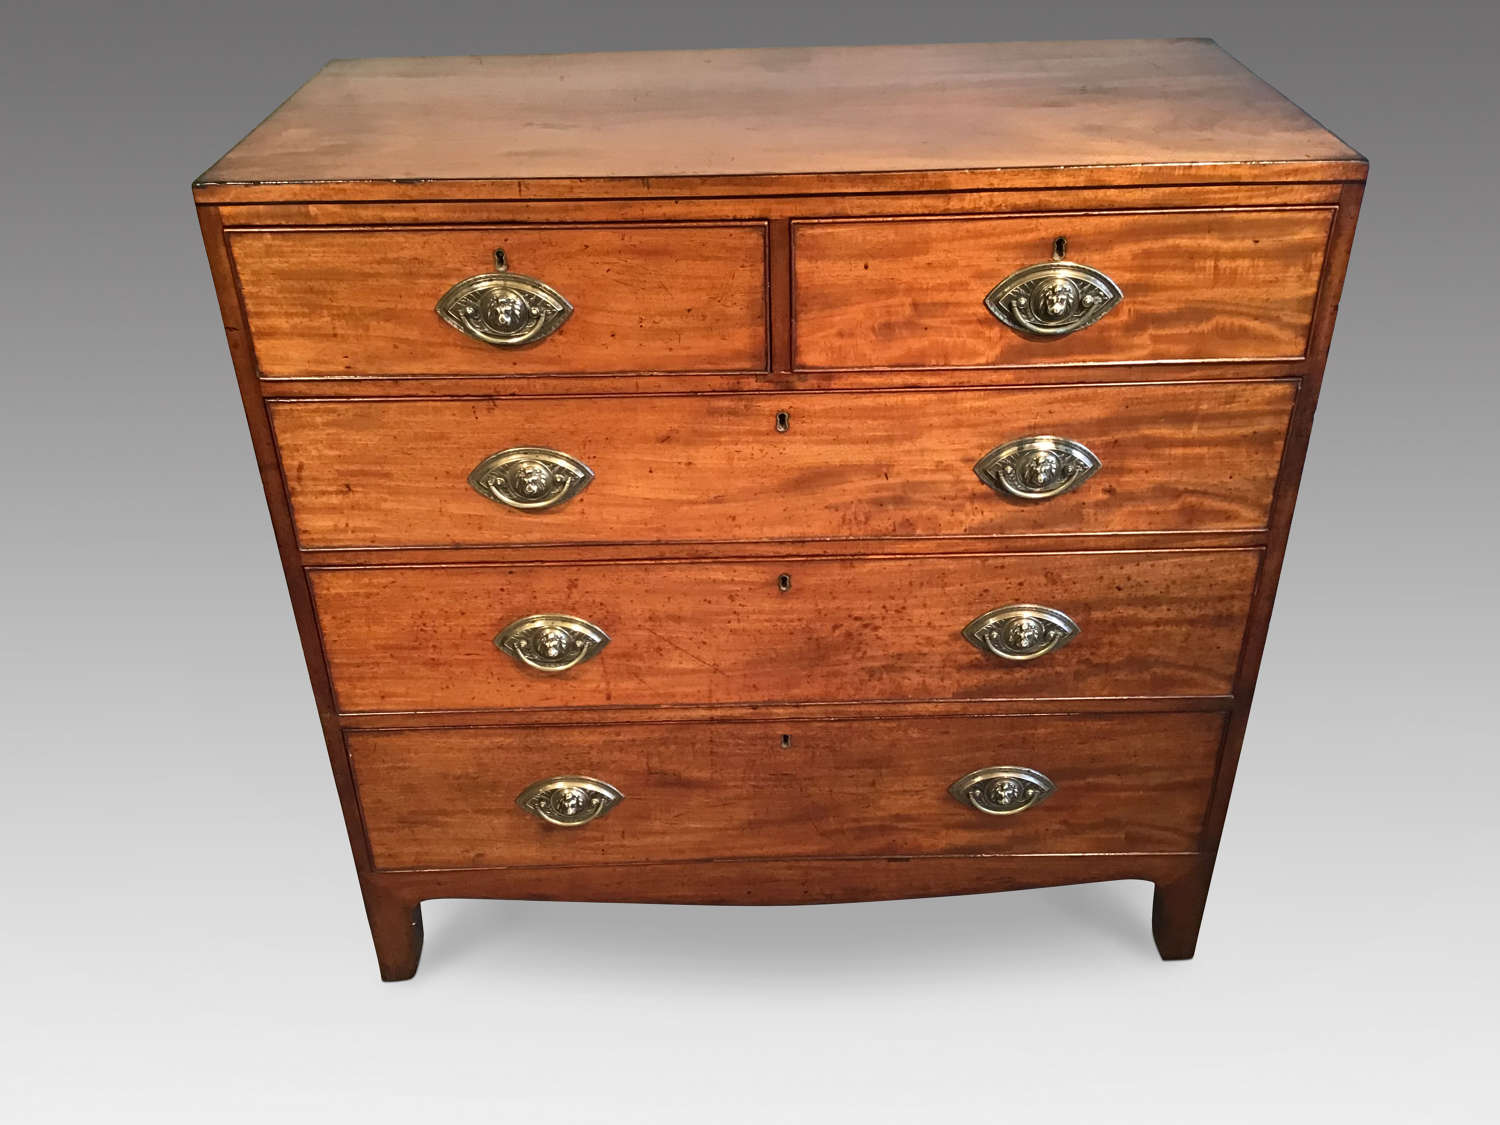 Regency mahogany chest of drawers.